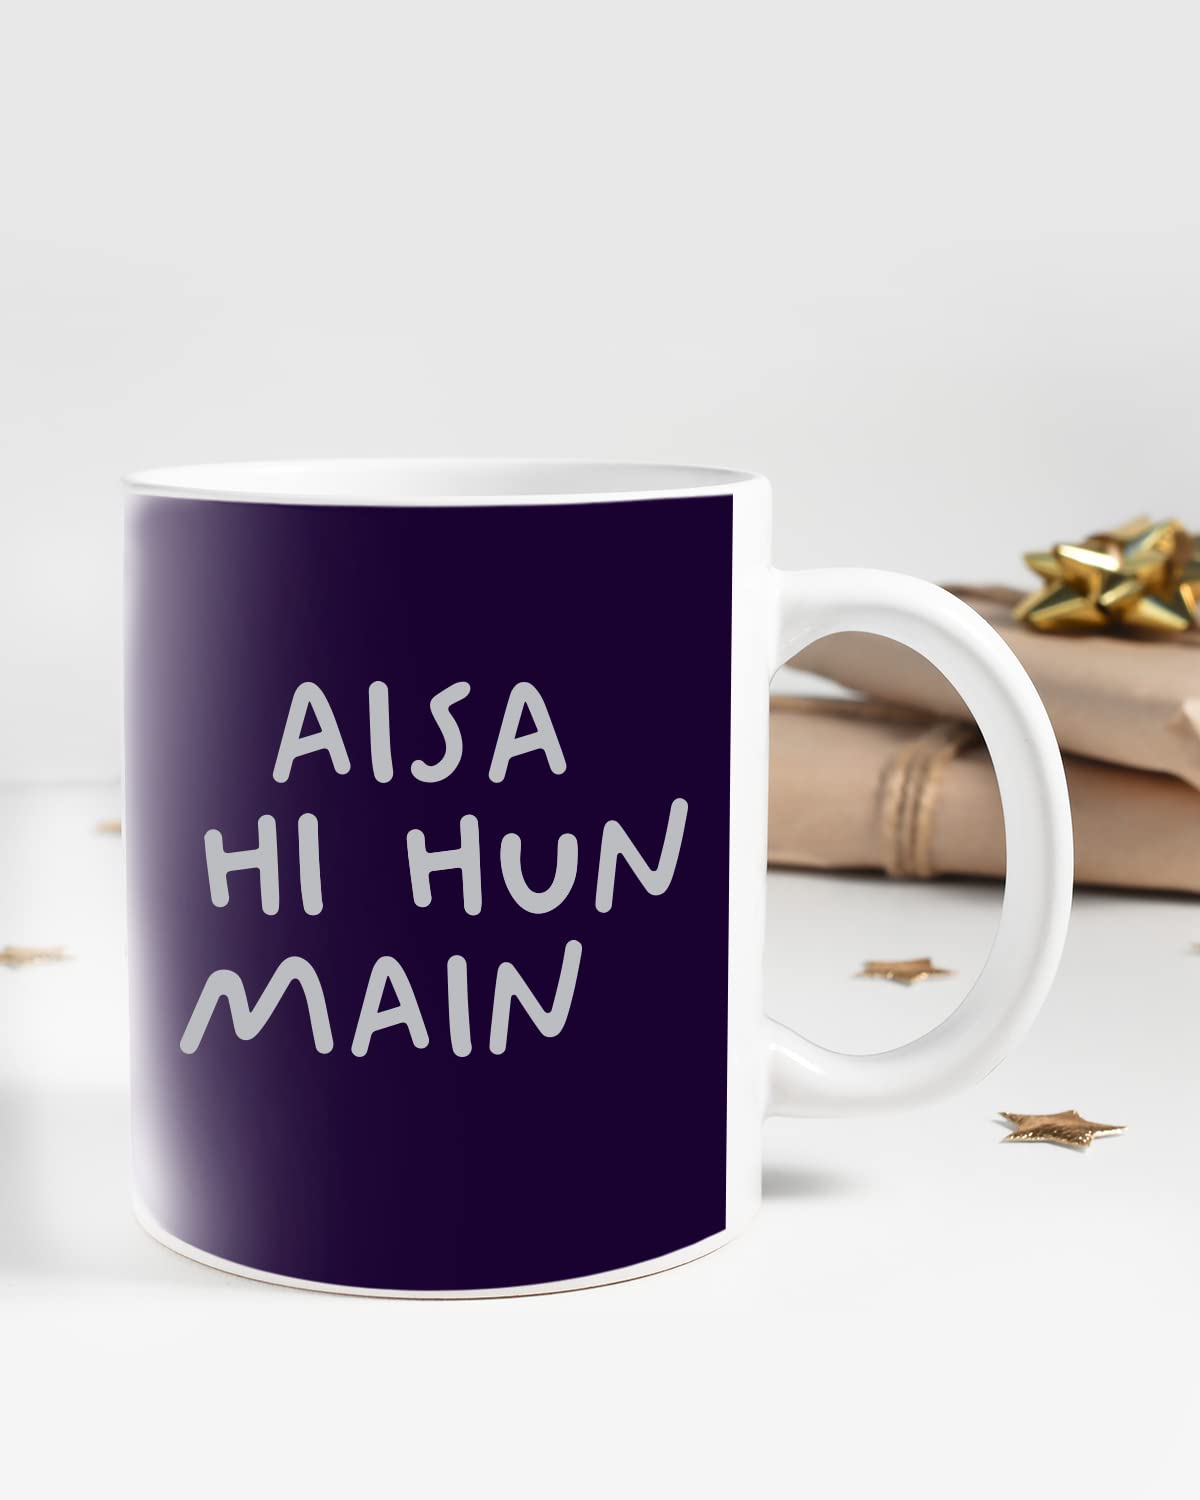 AISA HI HUN Main Coffee Mug - Gift for Friend, Birthday Gift, Birthday Mug, Sarcasm Quotes Mug, Mugs with Funny & Funky Dialogues, Bollywood Mugs, Funny Mugs for Him & Her